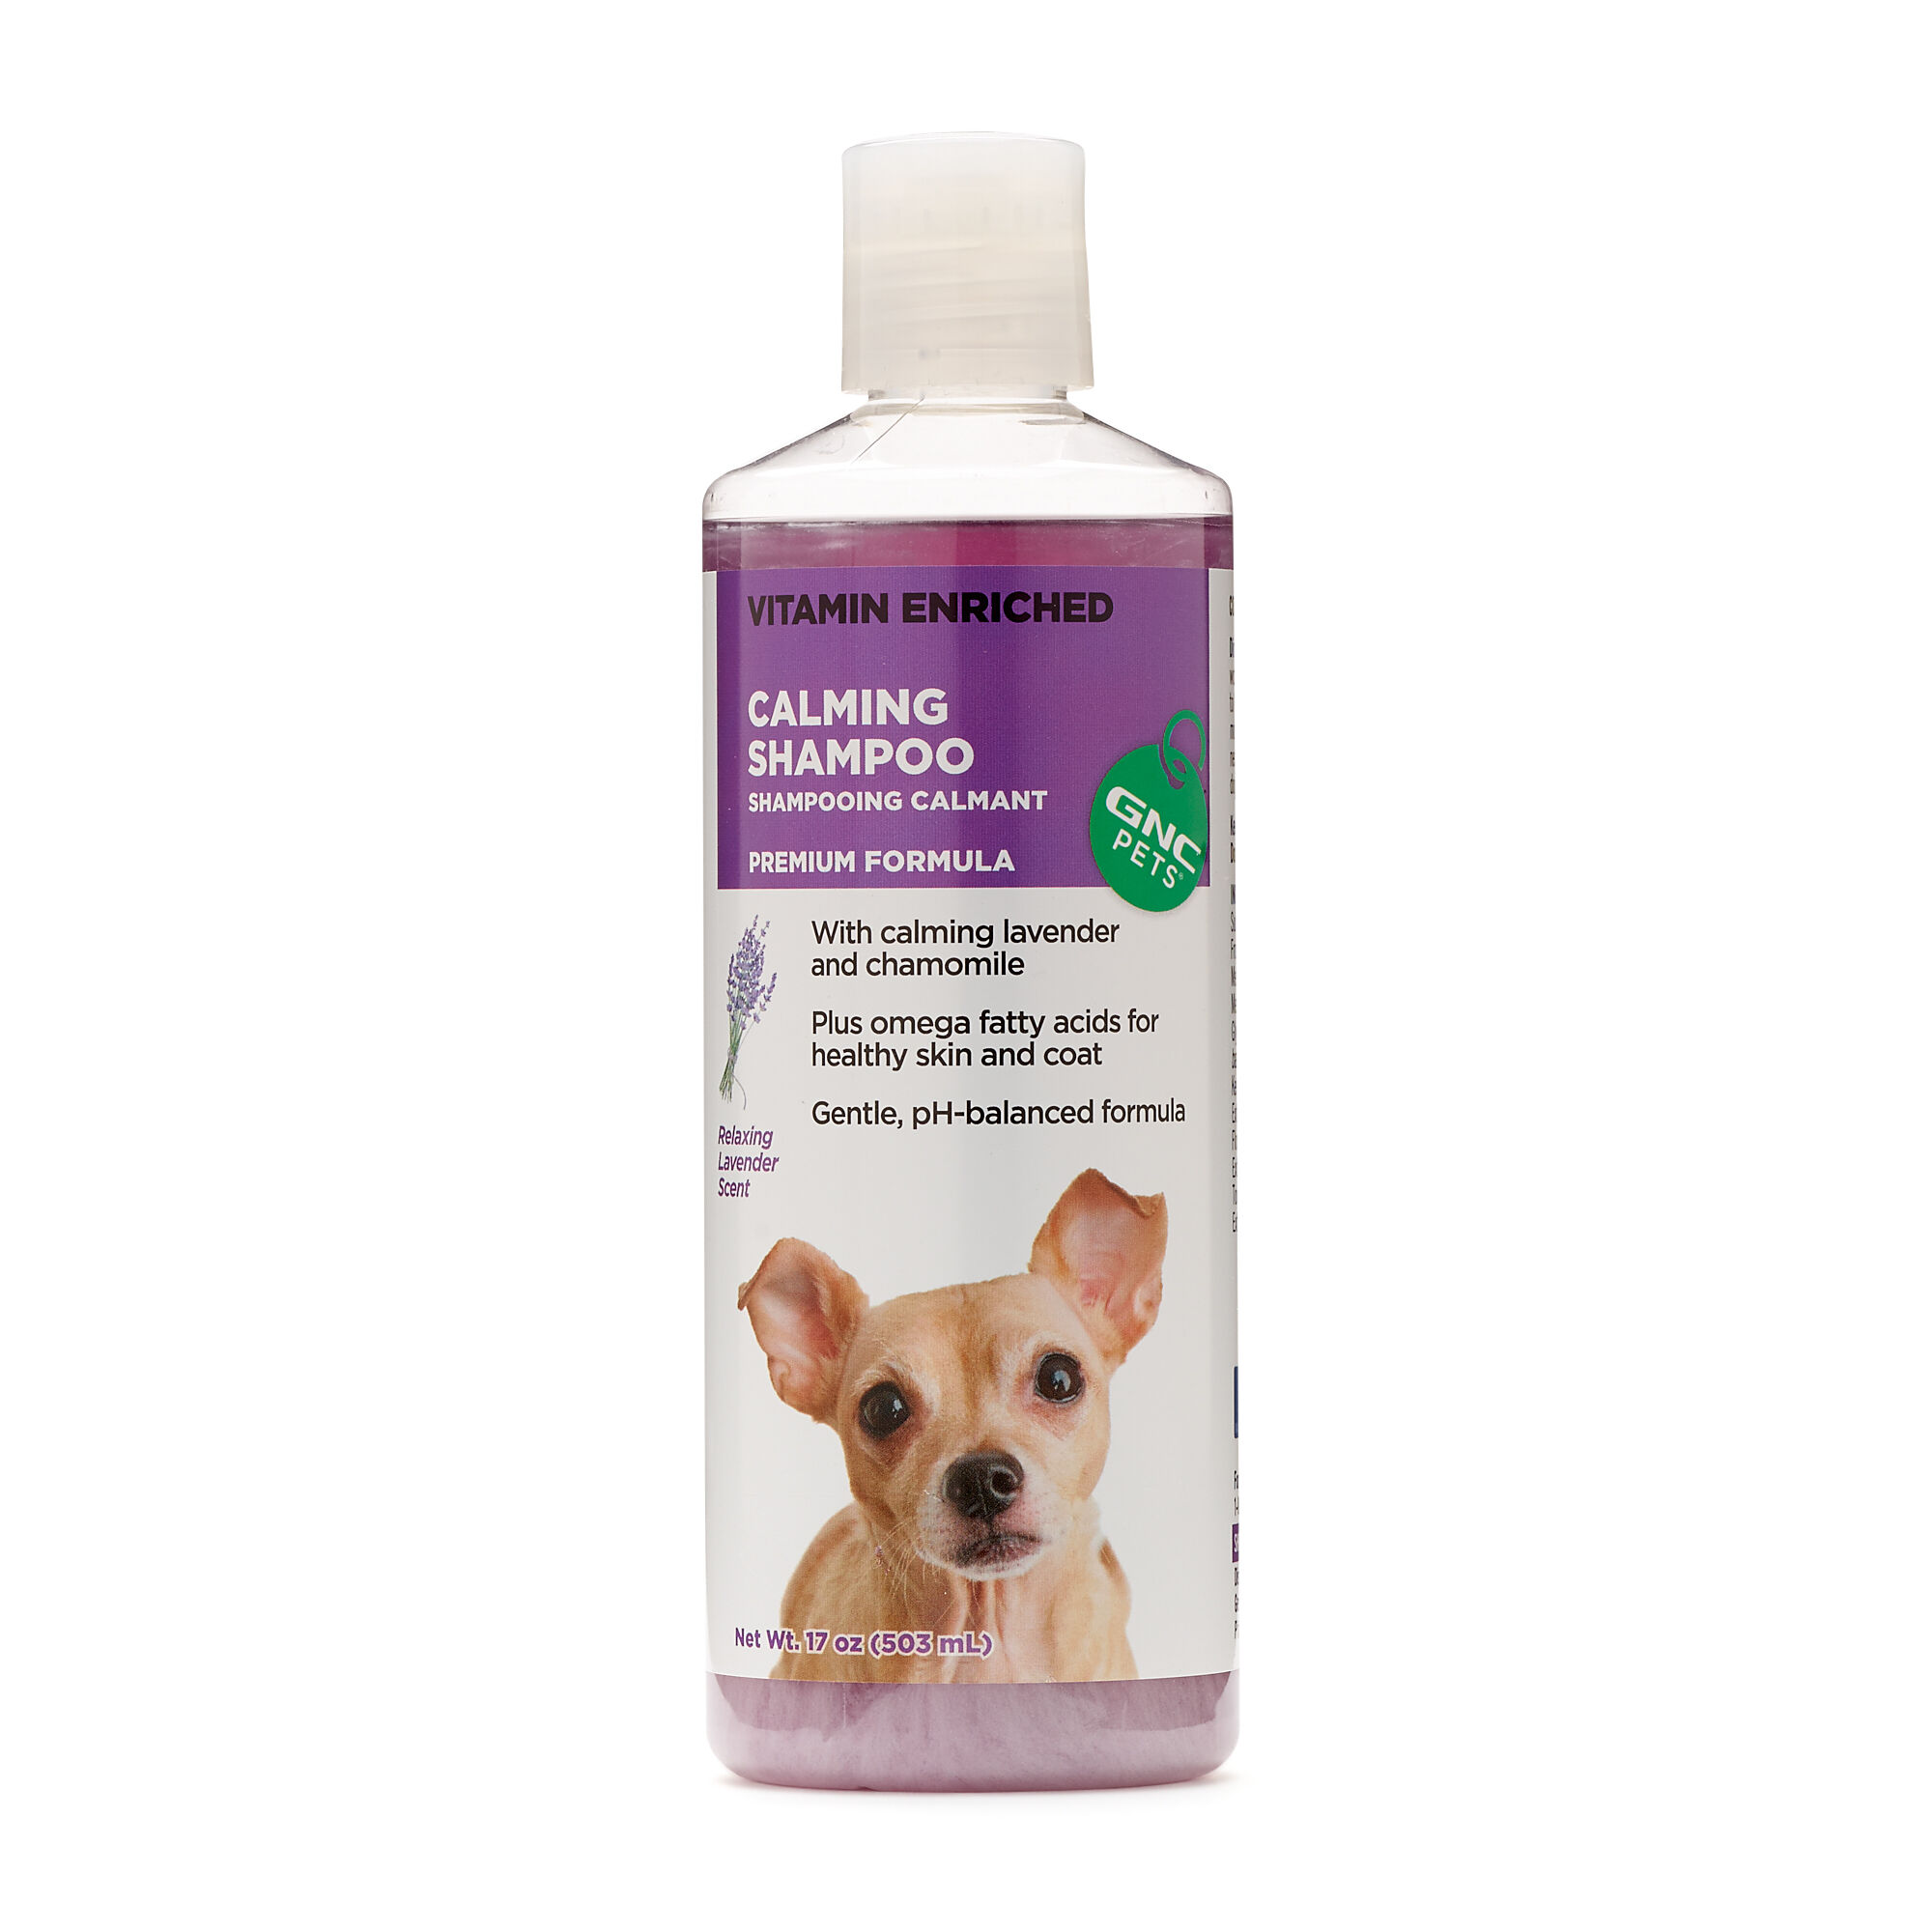 gnc dog shampoo